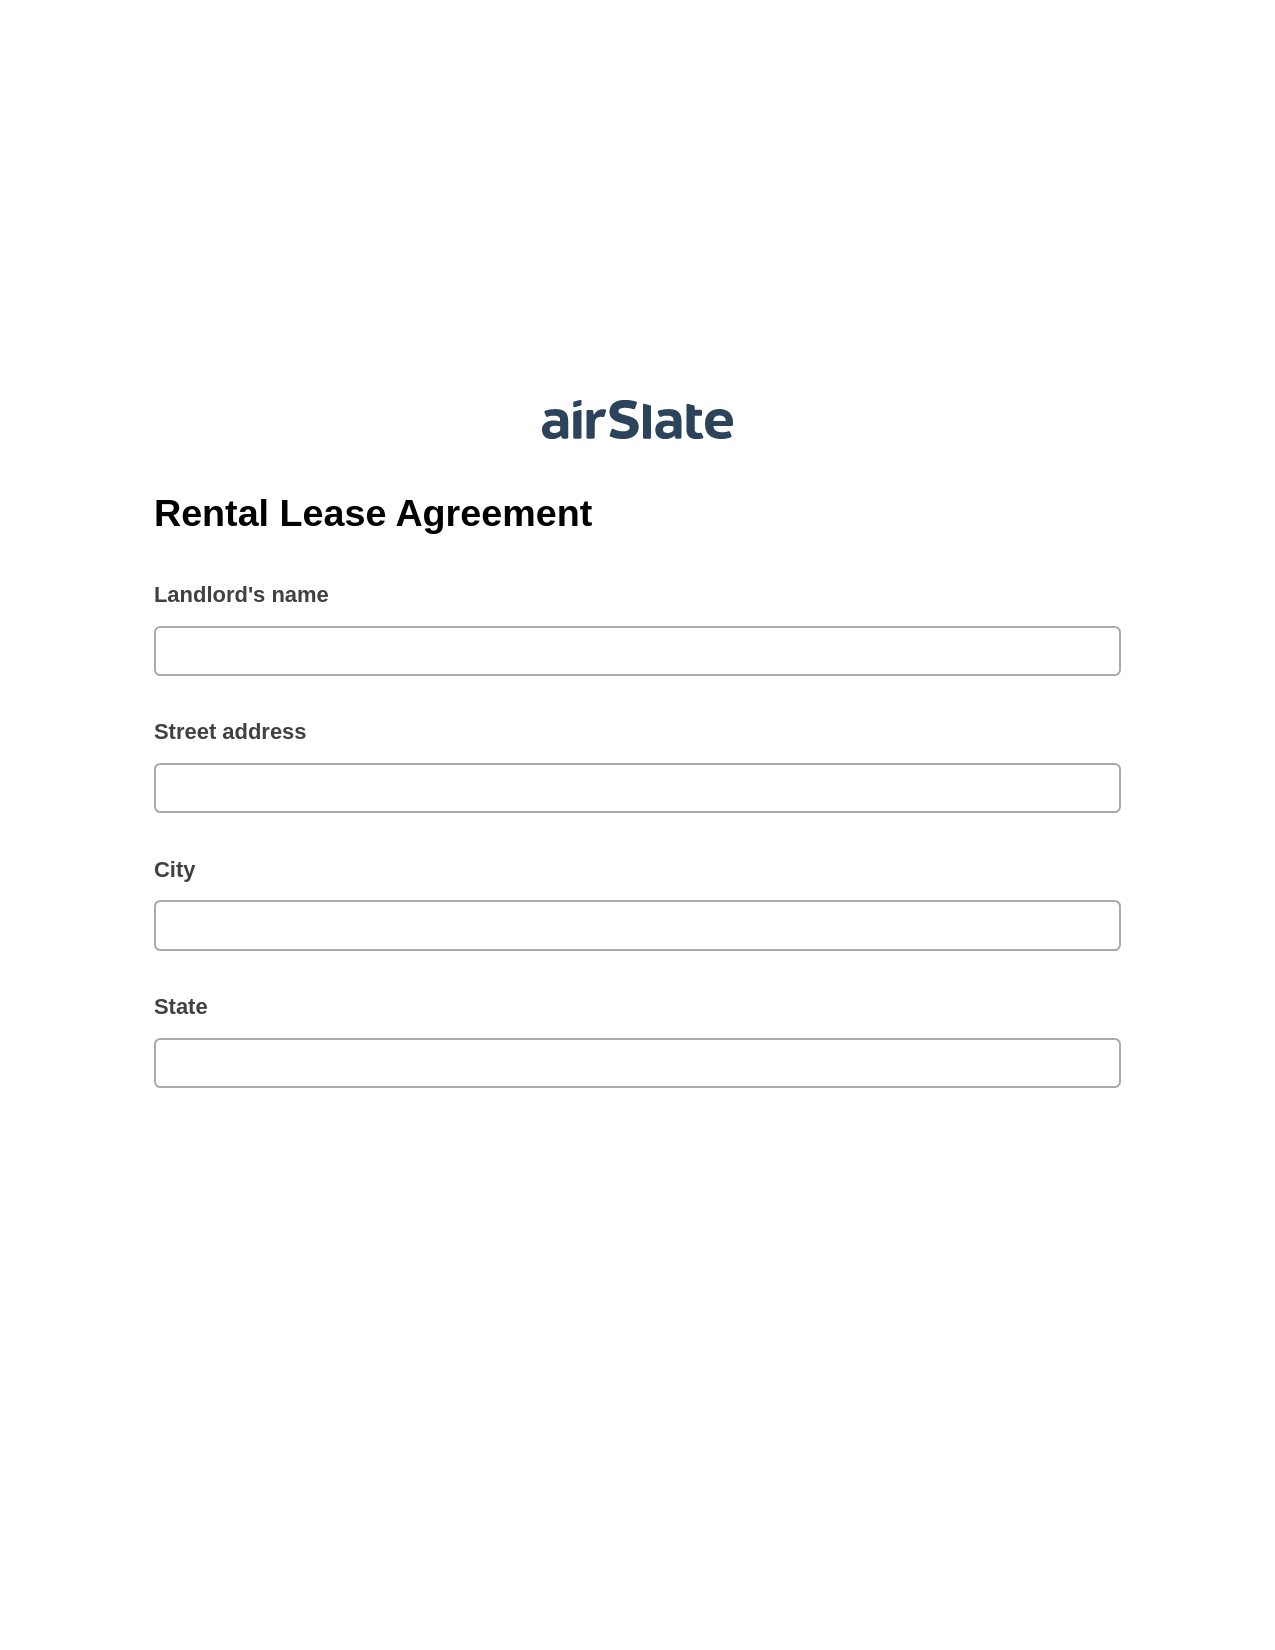 Rental Lease Agreement Pre-fill from Google Sheet Dropdown Options Bot, Google Cloud Print Bot, Slack Two-Way Binding Bot